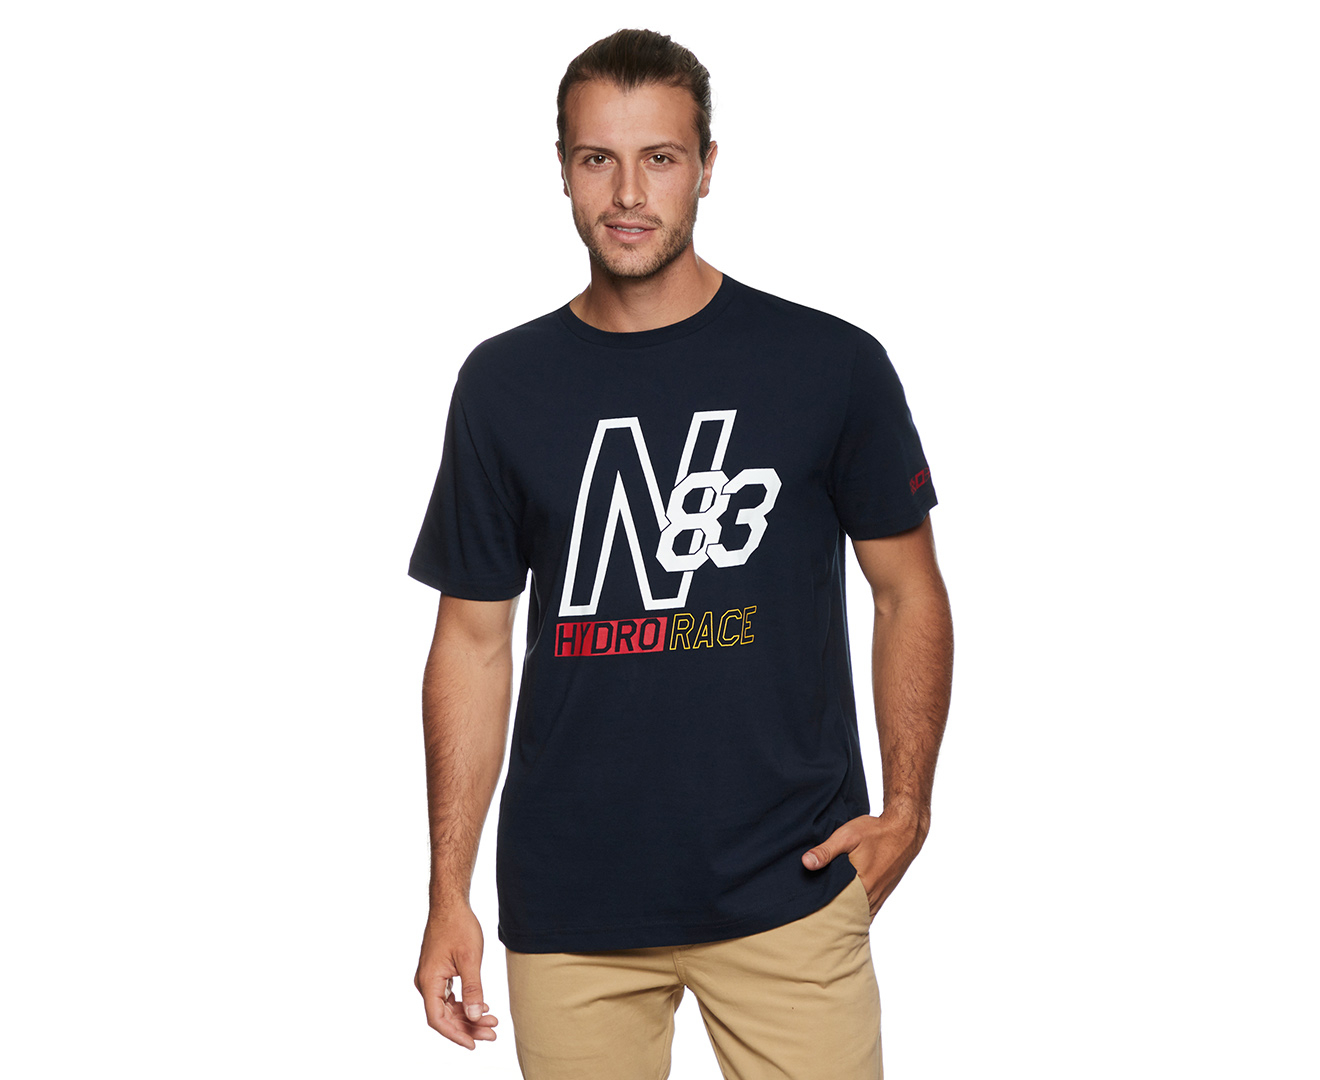 Nautica Men's Hydro Race N83 Tee / T-Shirt / Tshirt - Navy | Catch.com.au